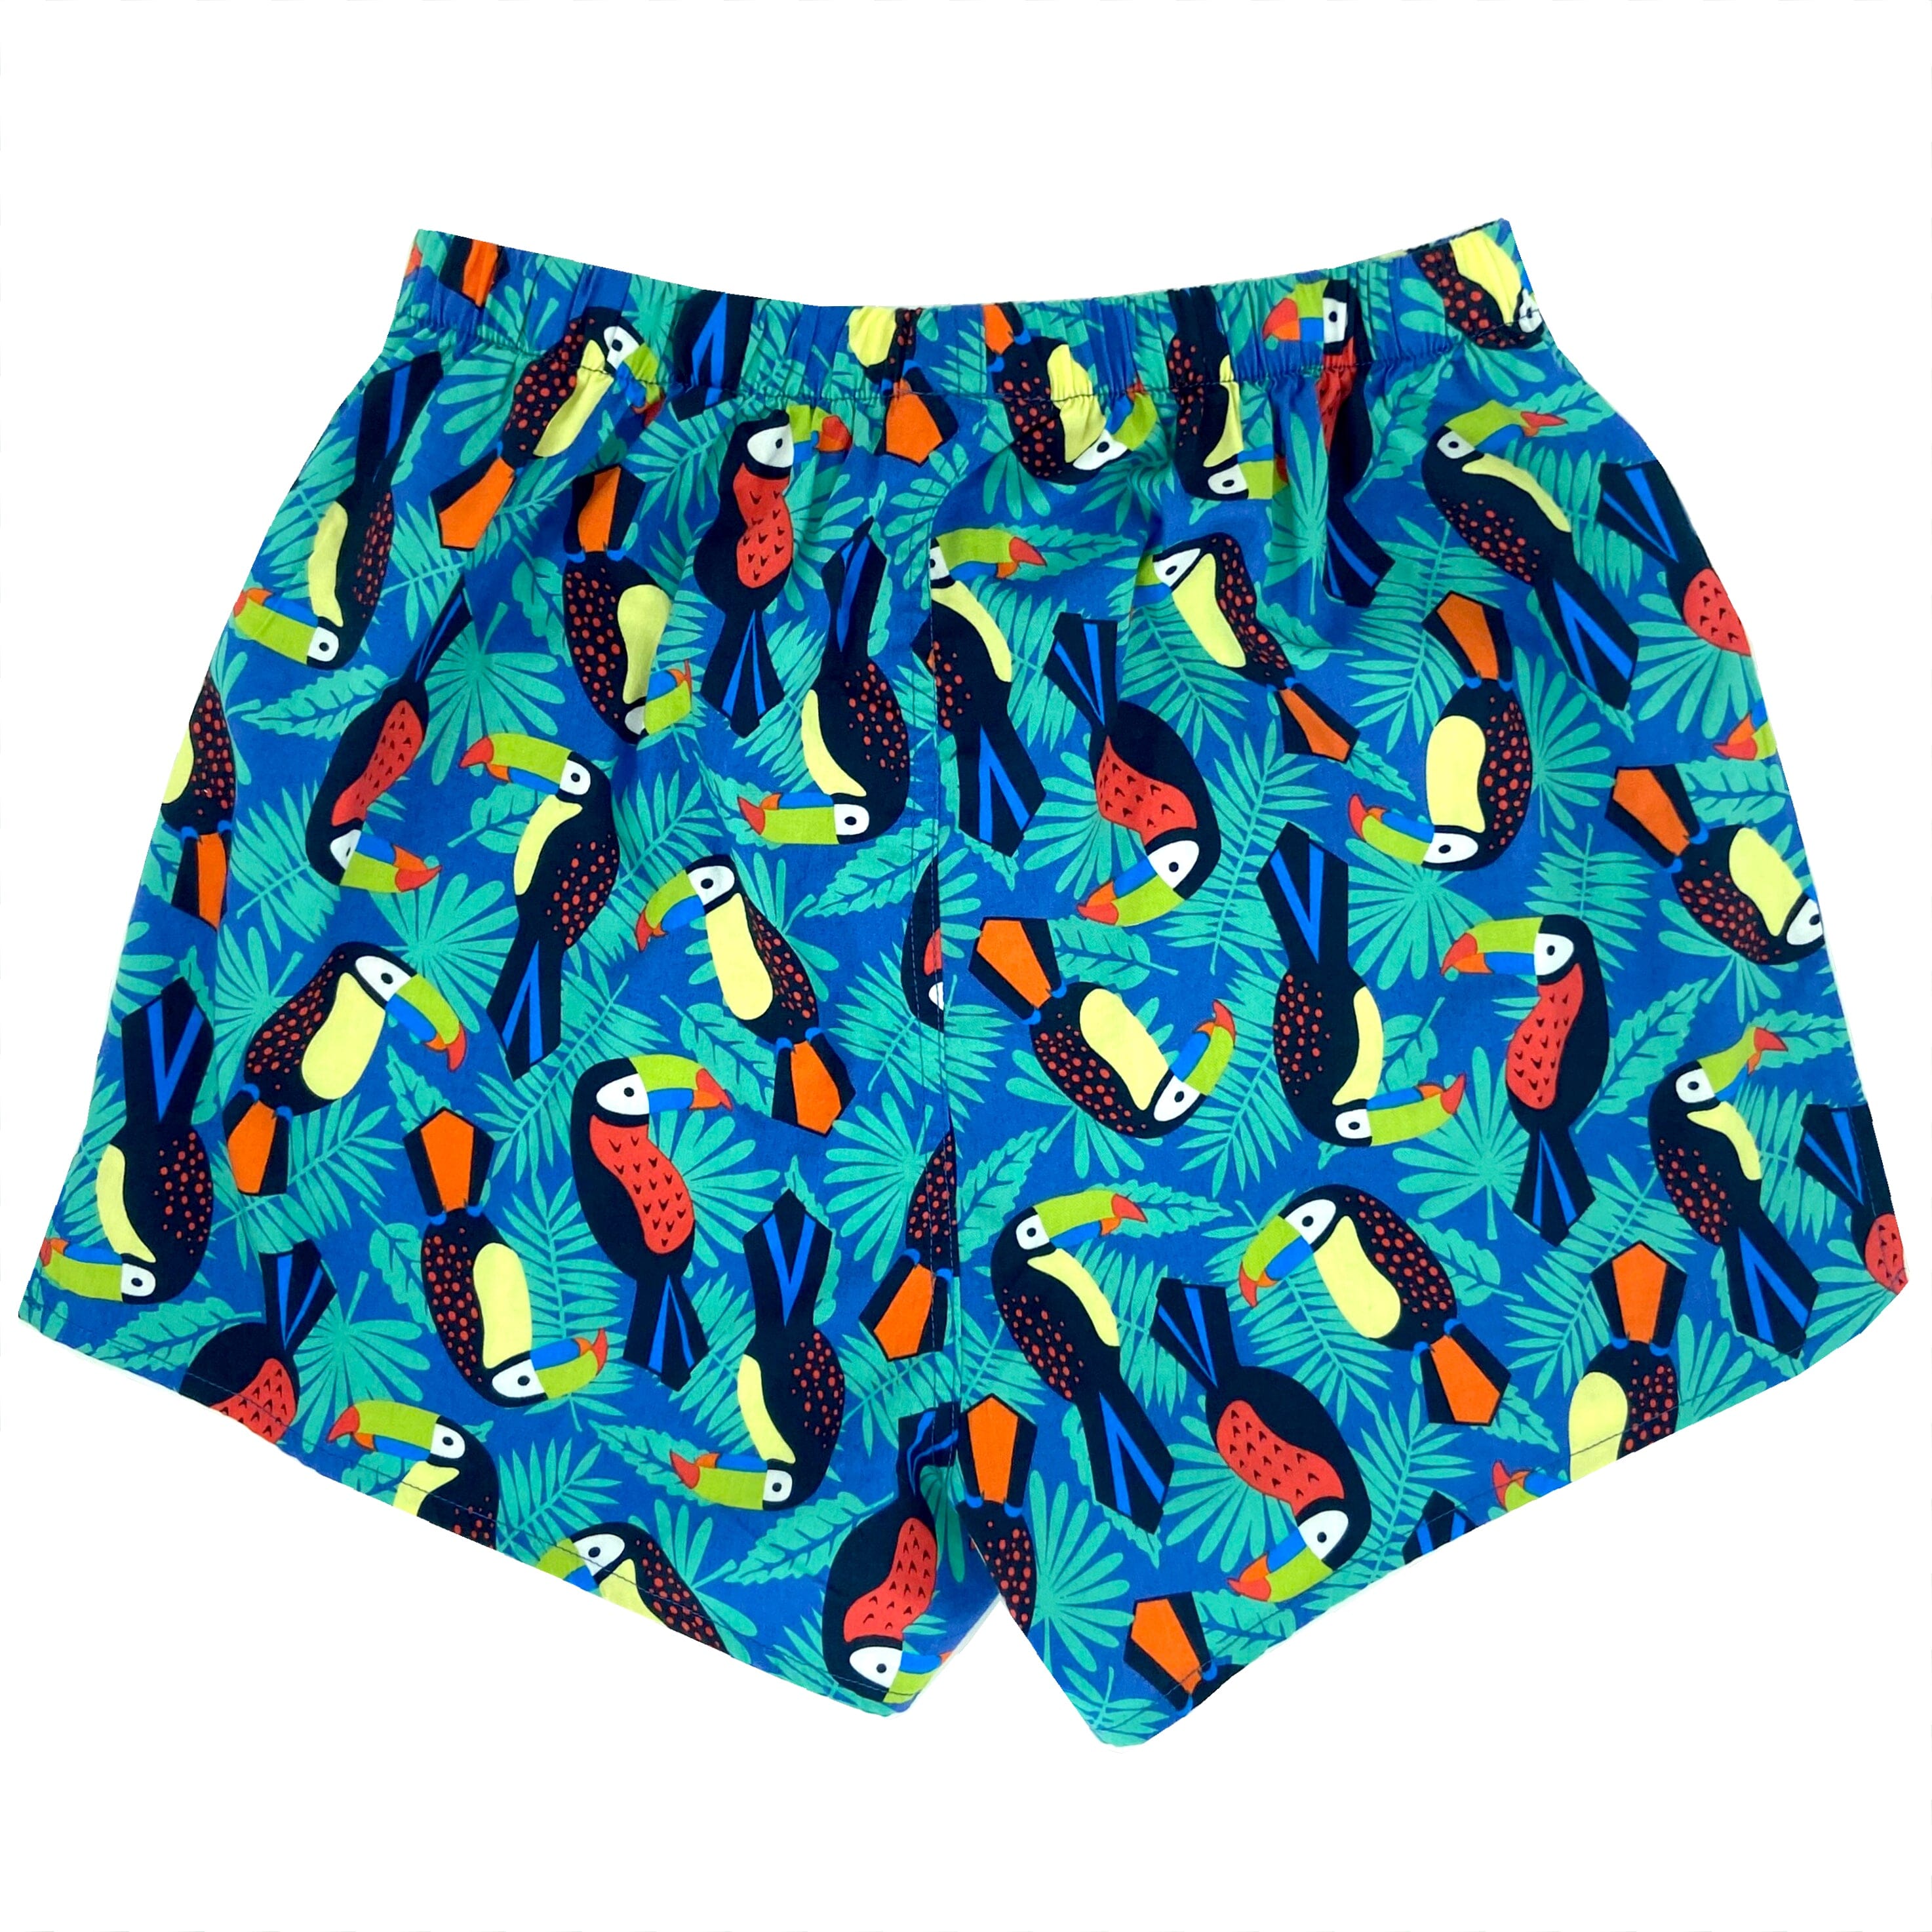 Men's Vibrant Toucan Bird Animal Patterned Cotton Boxer Shorts S-XXL